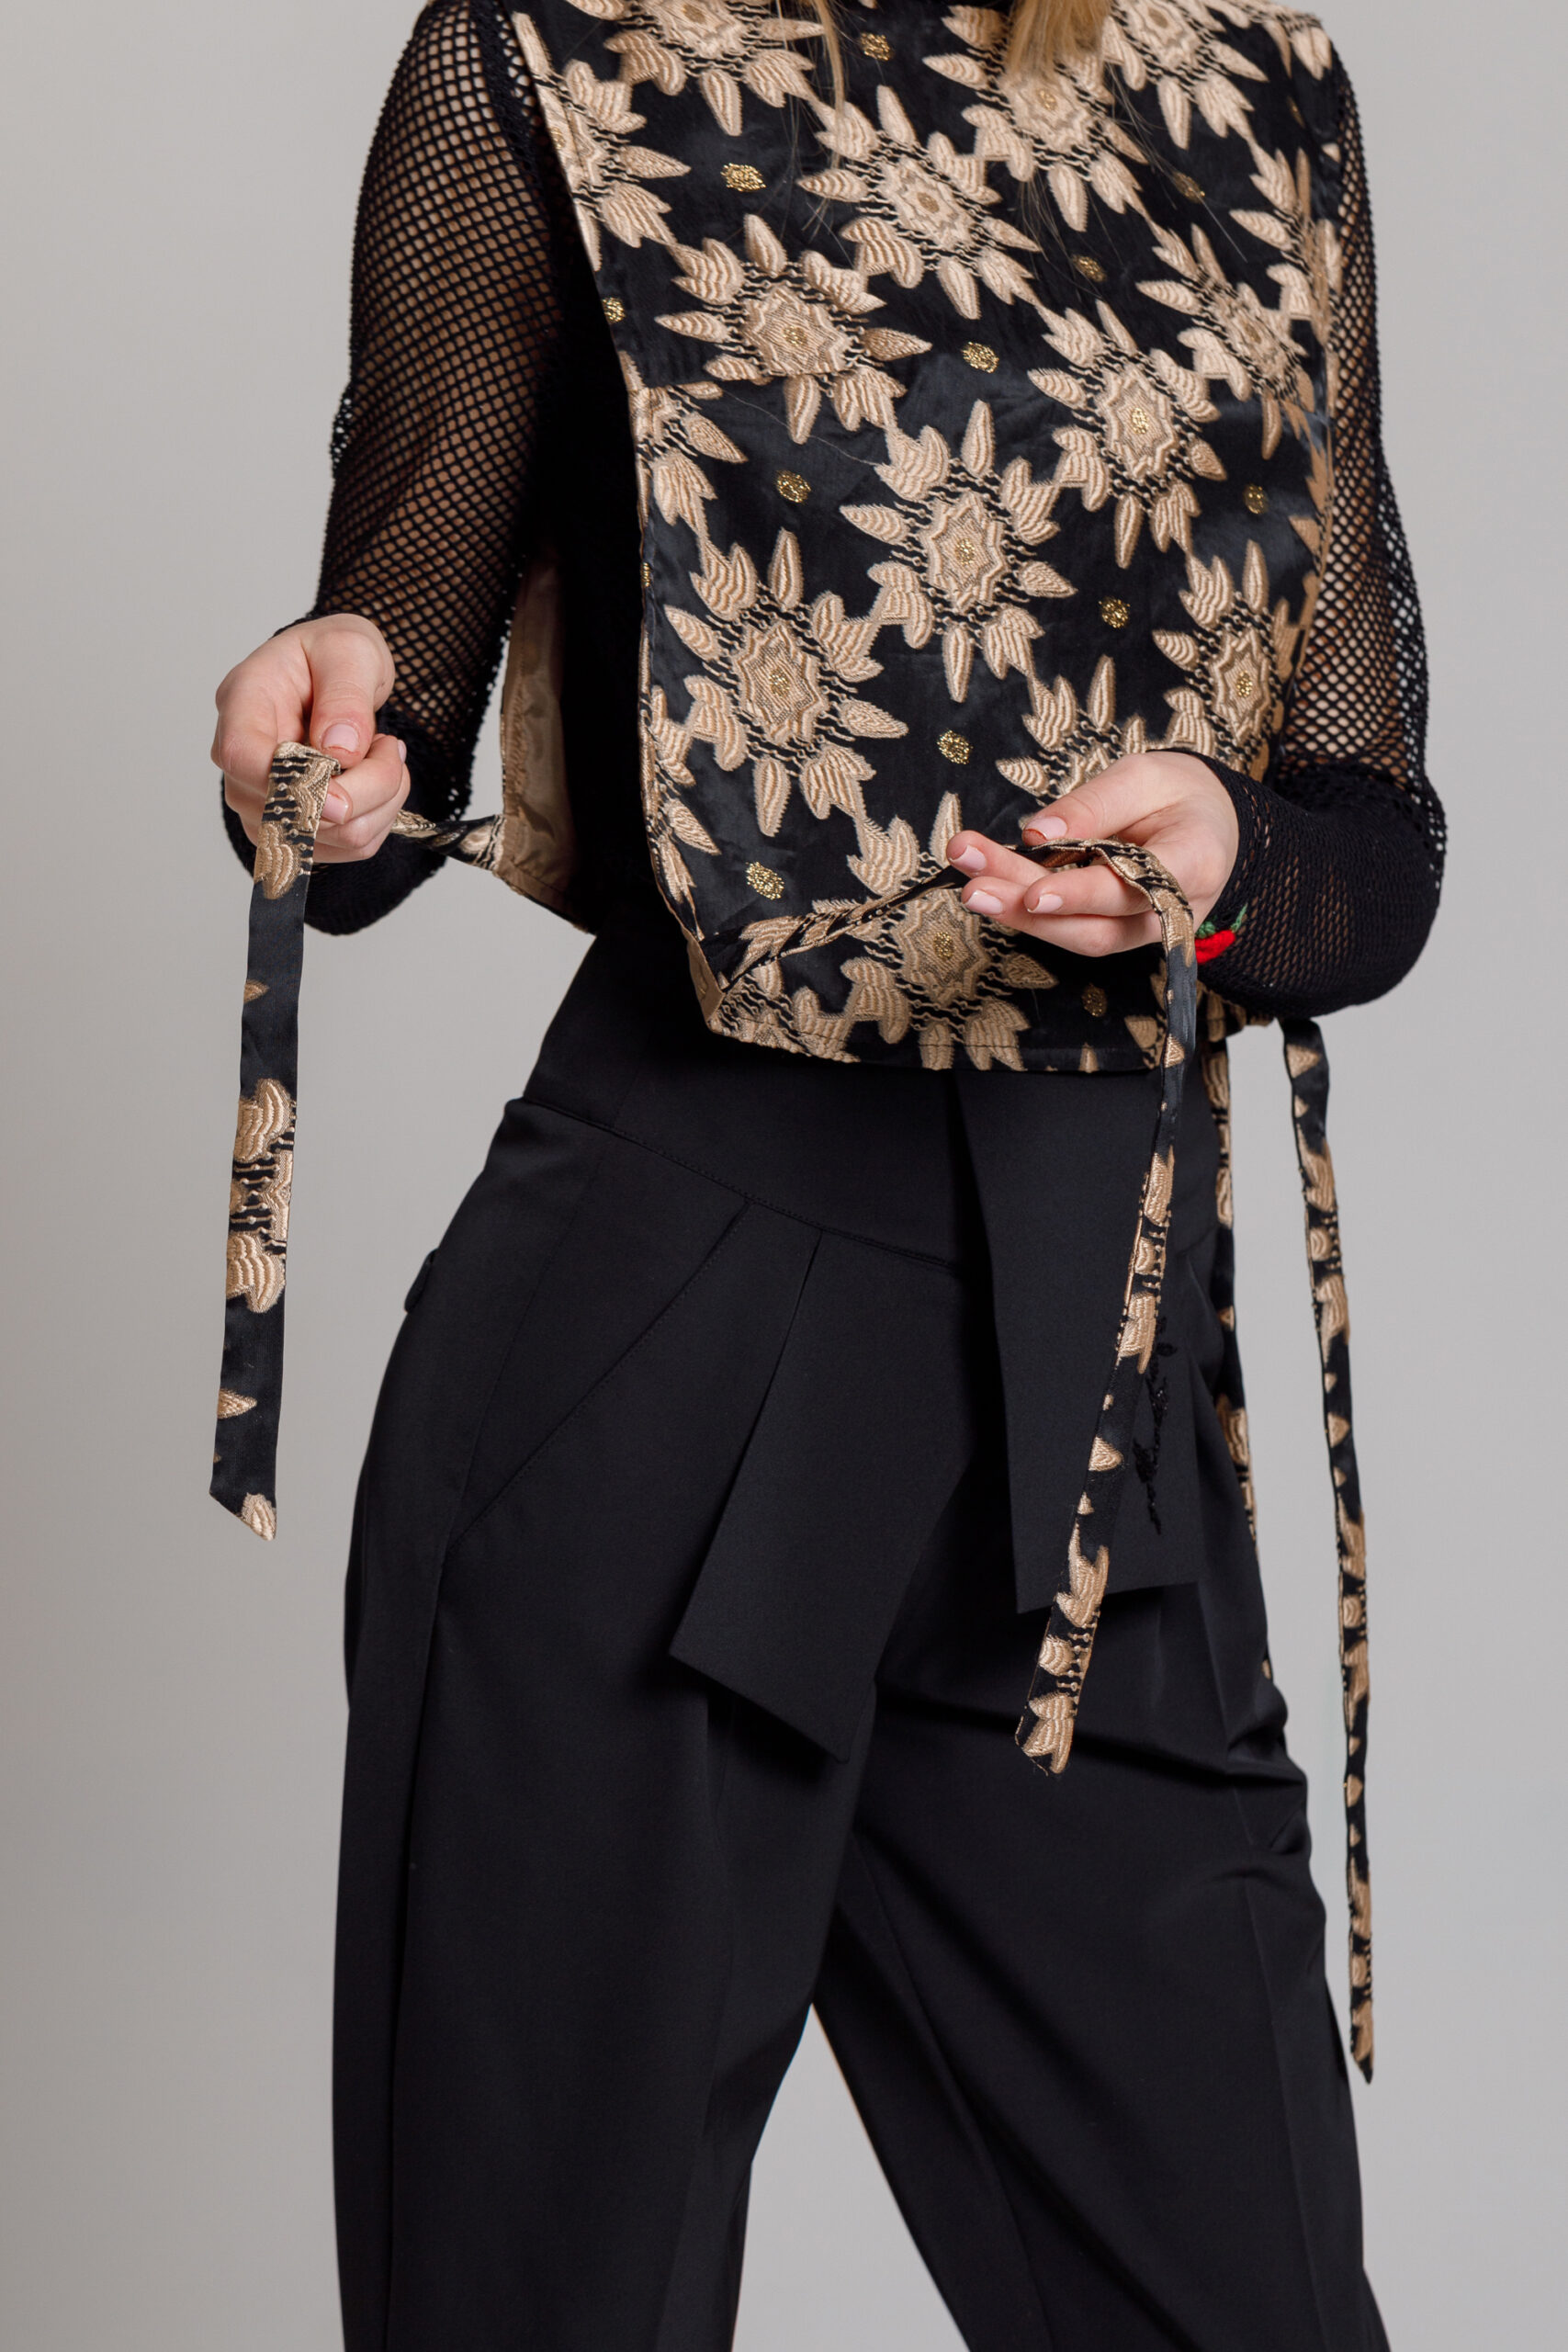 LORA floral jacquard fabric vest. Natural fabrics, original design, handmade embroidery